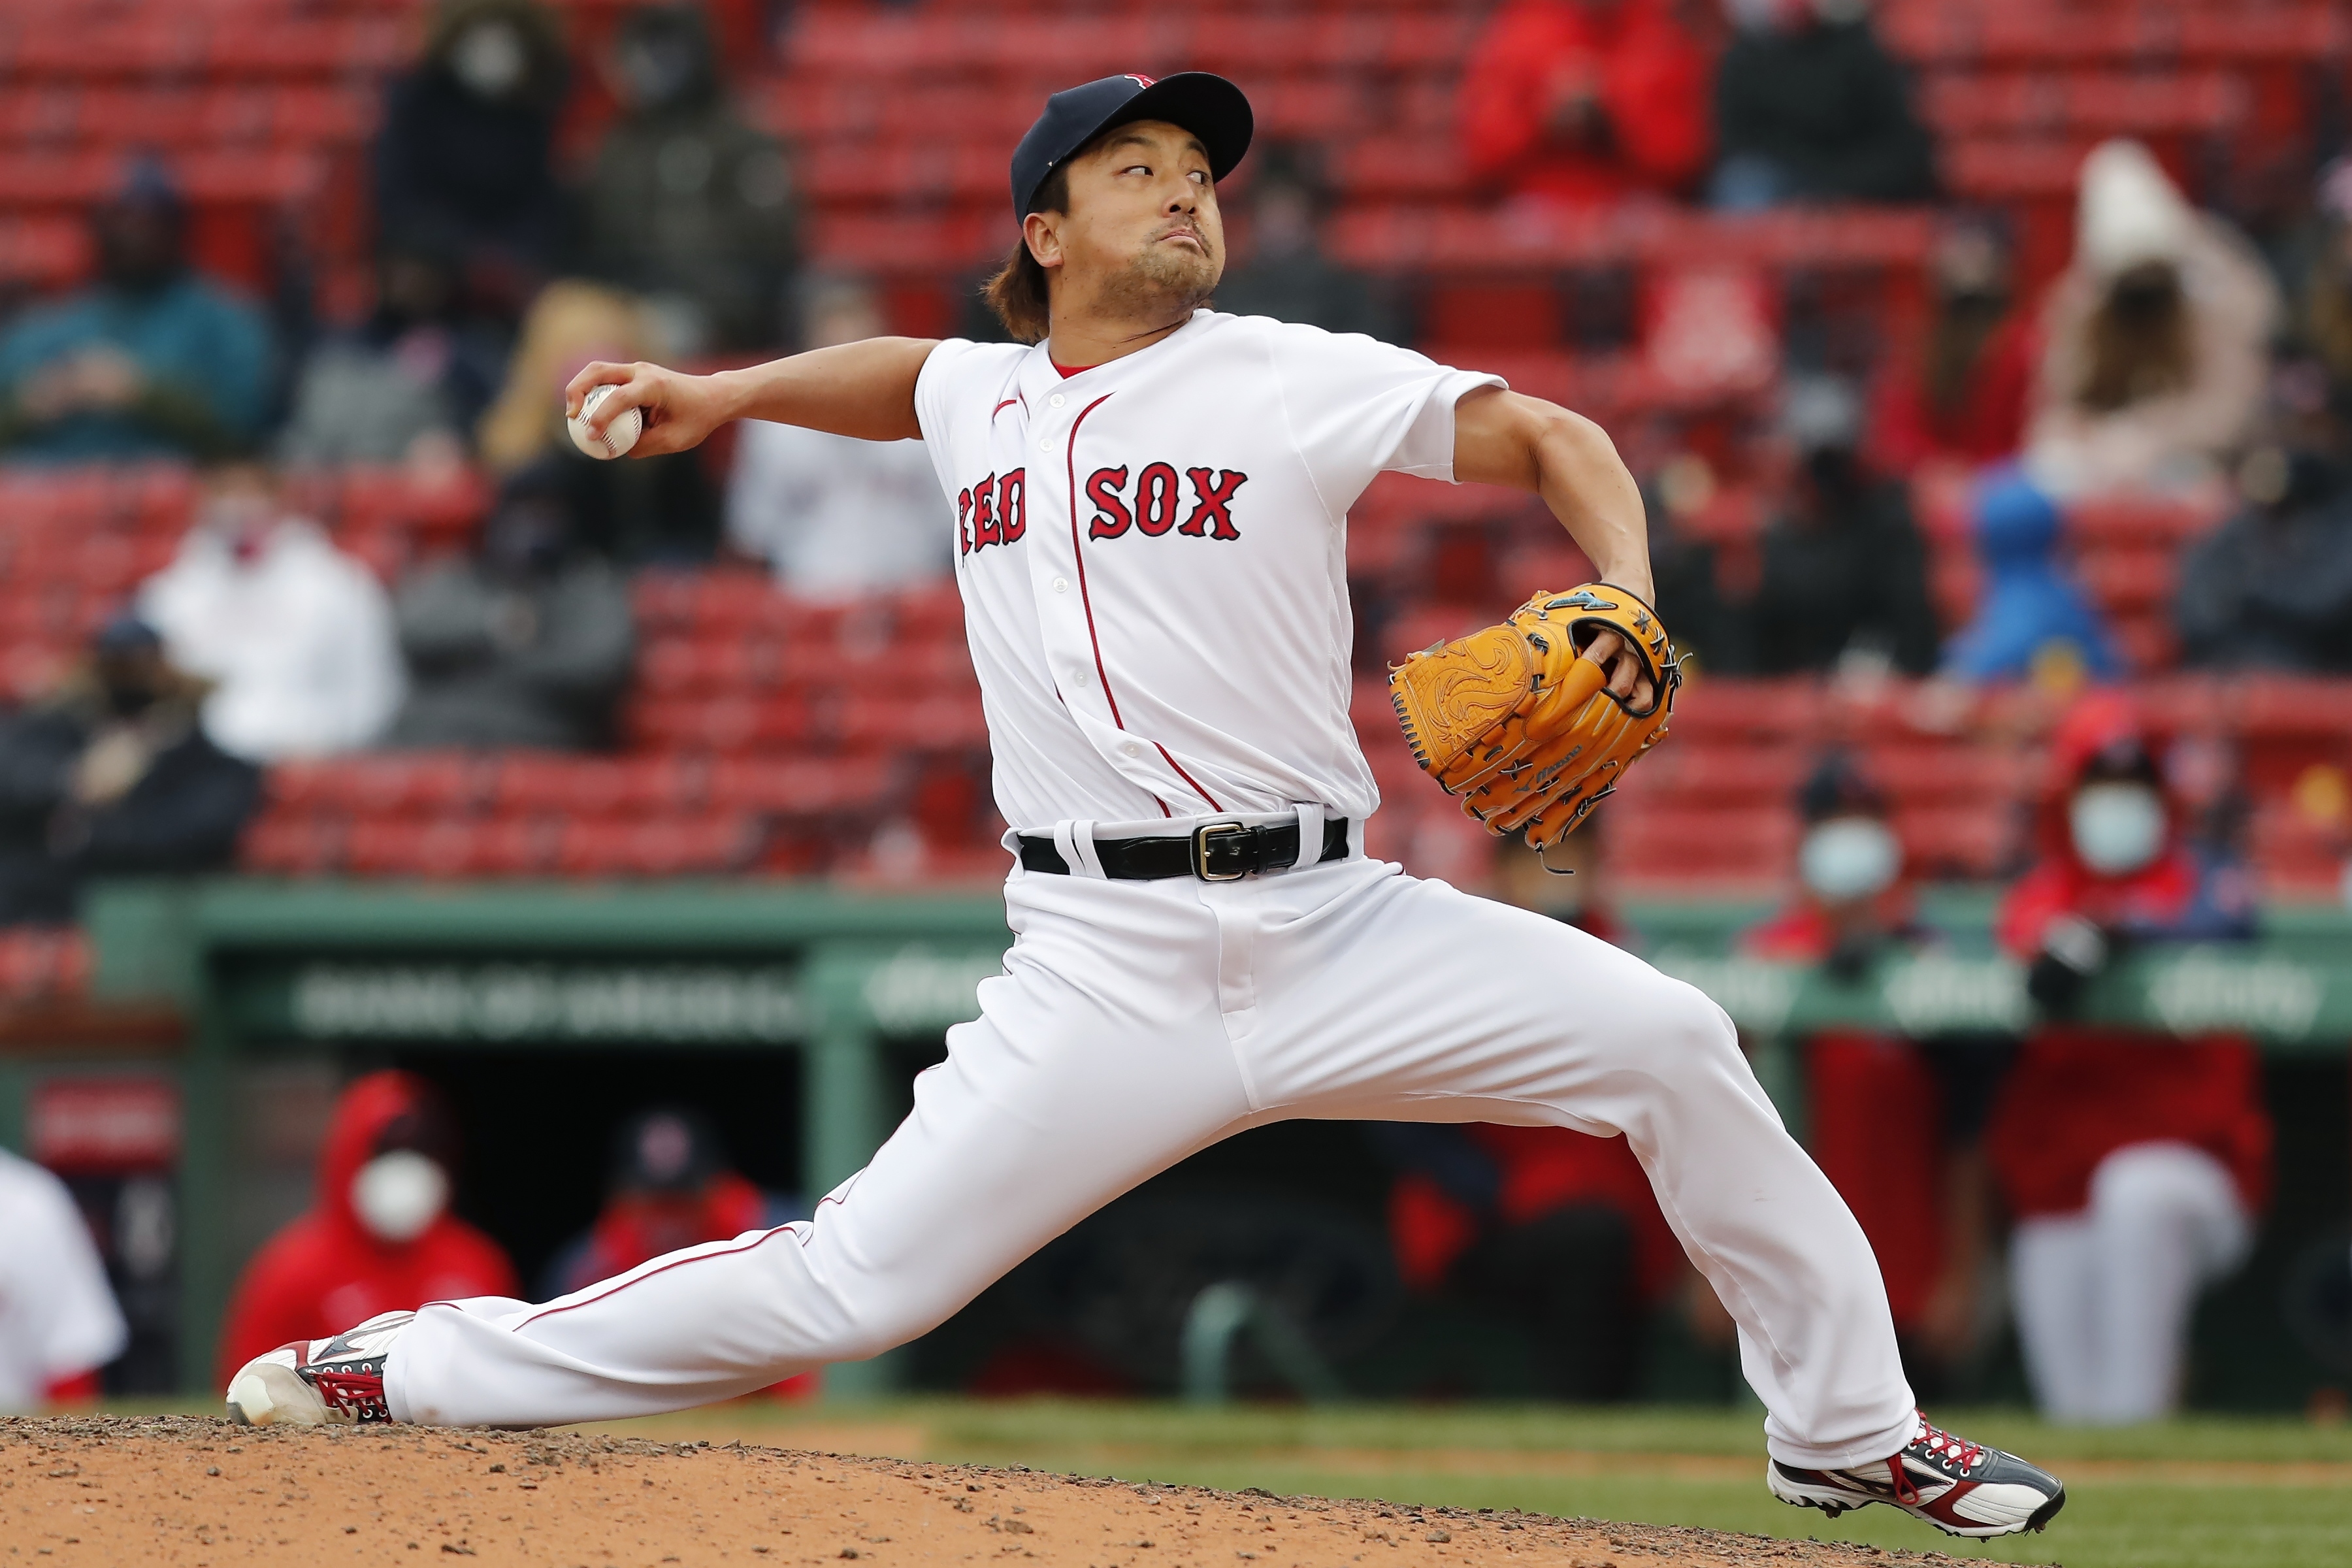 Boston Red Sox Series Preview: Can Hirokazu Sawamura find a